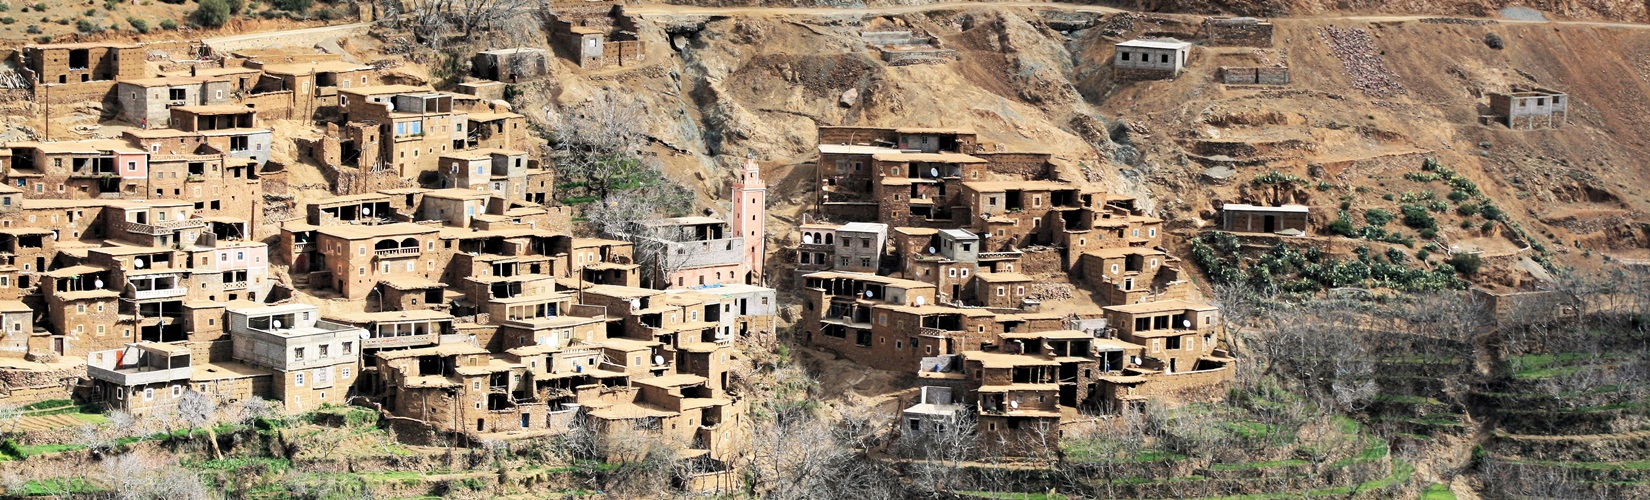 Tradition Berber Villages